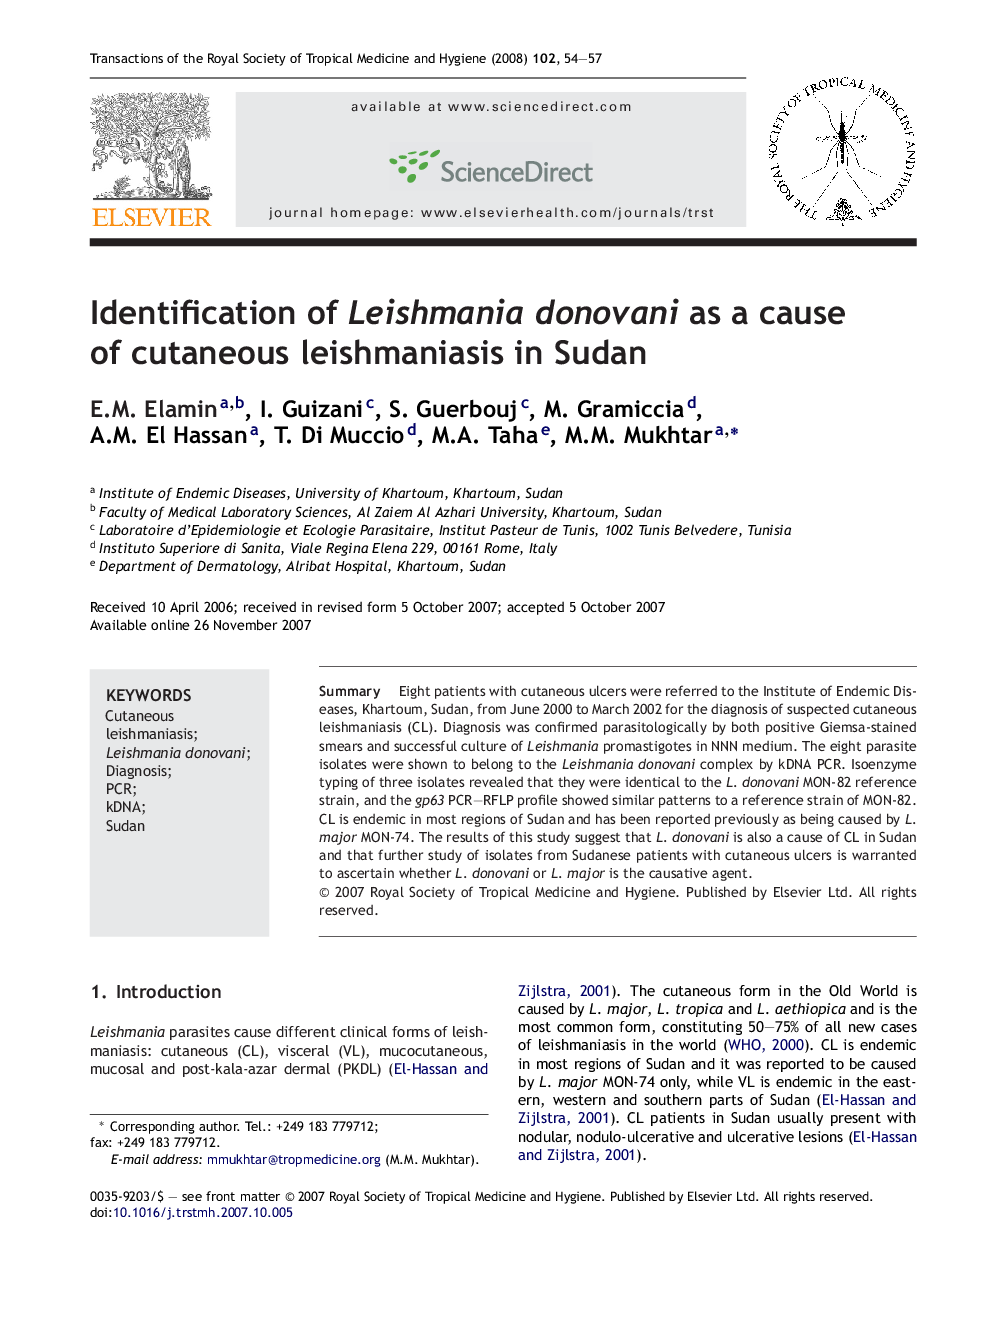 Identification of Leishmania donovani as a cause of cutaneous leishmaniasis in Sudan